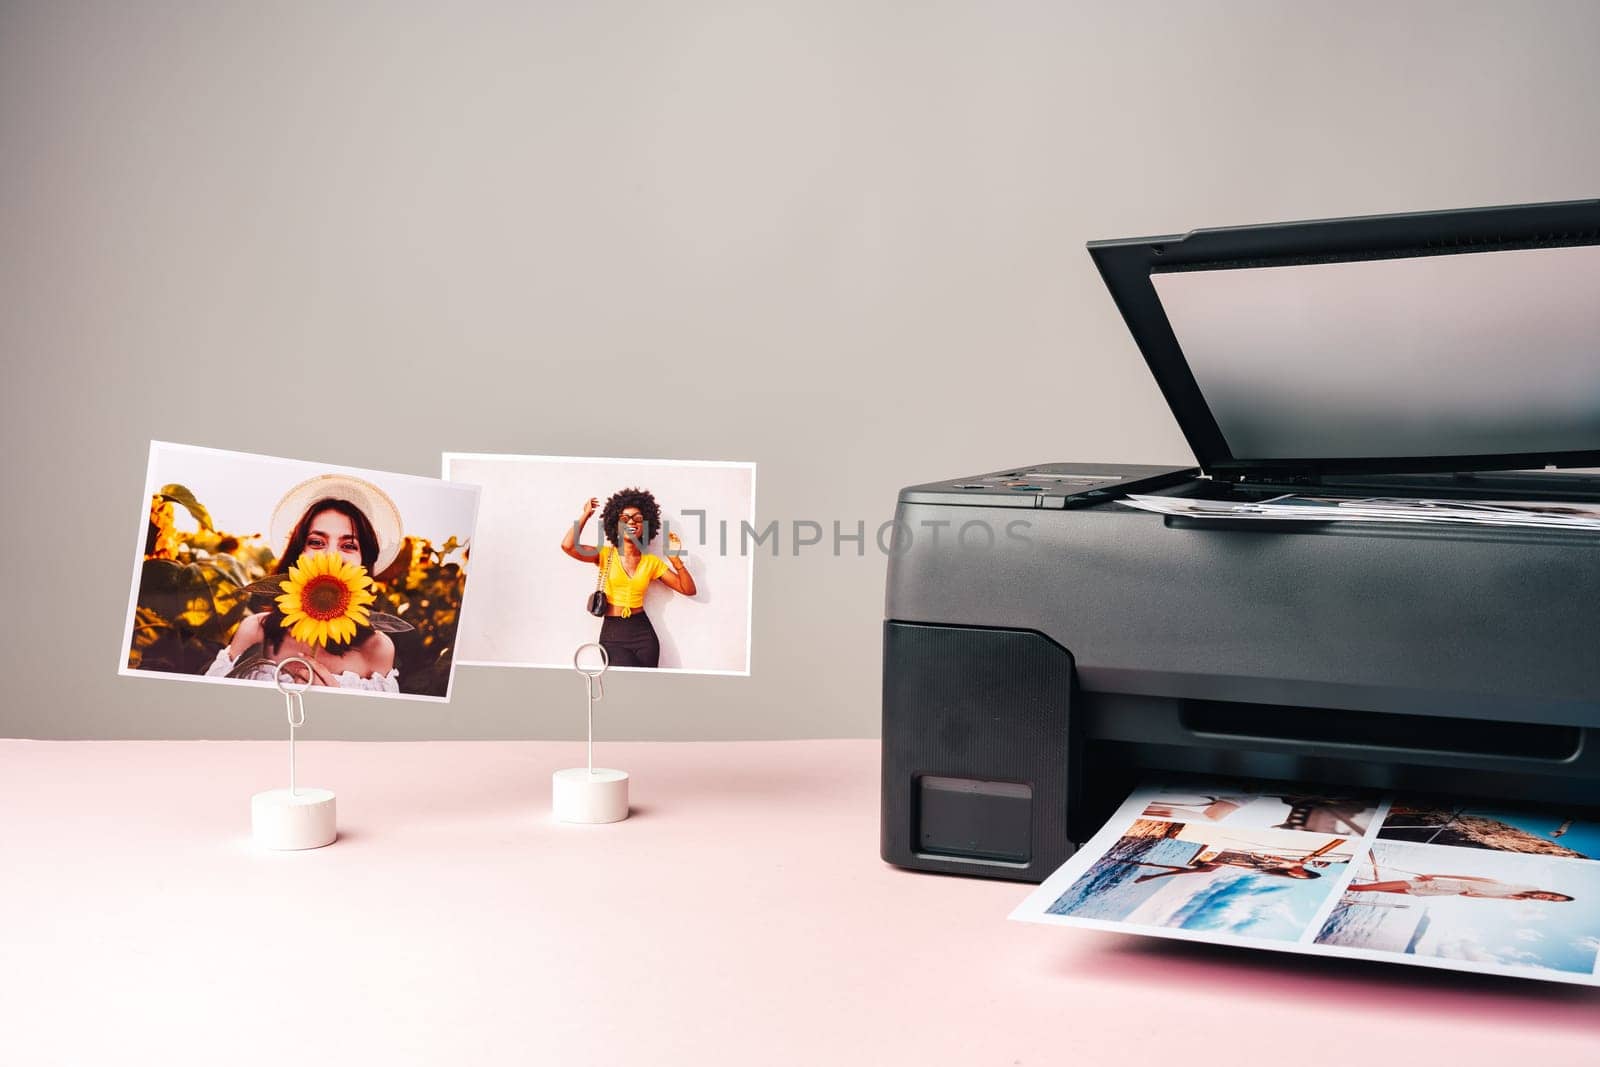 Modern laser printer printing color photos of women close up on desk